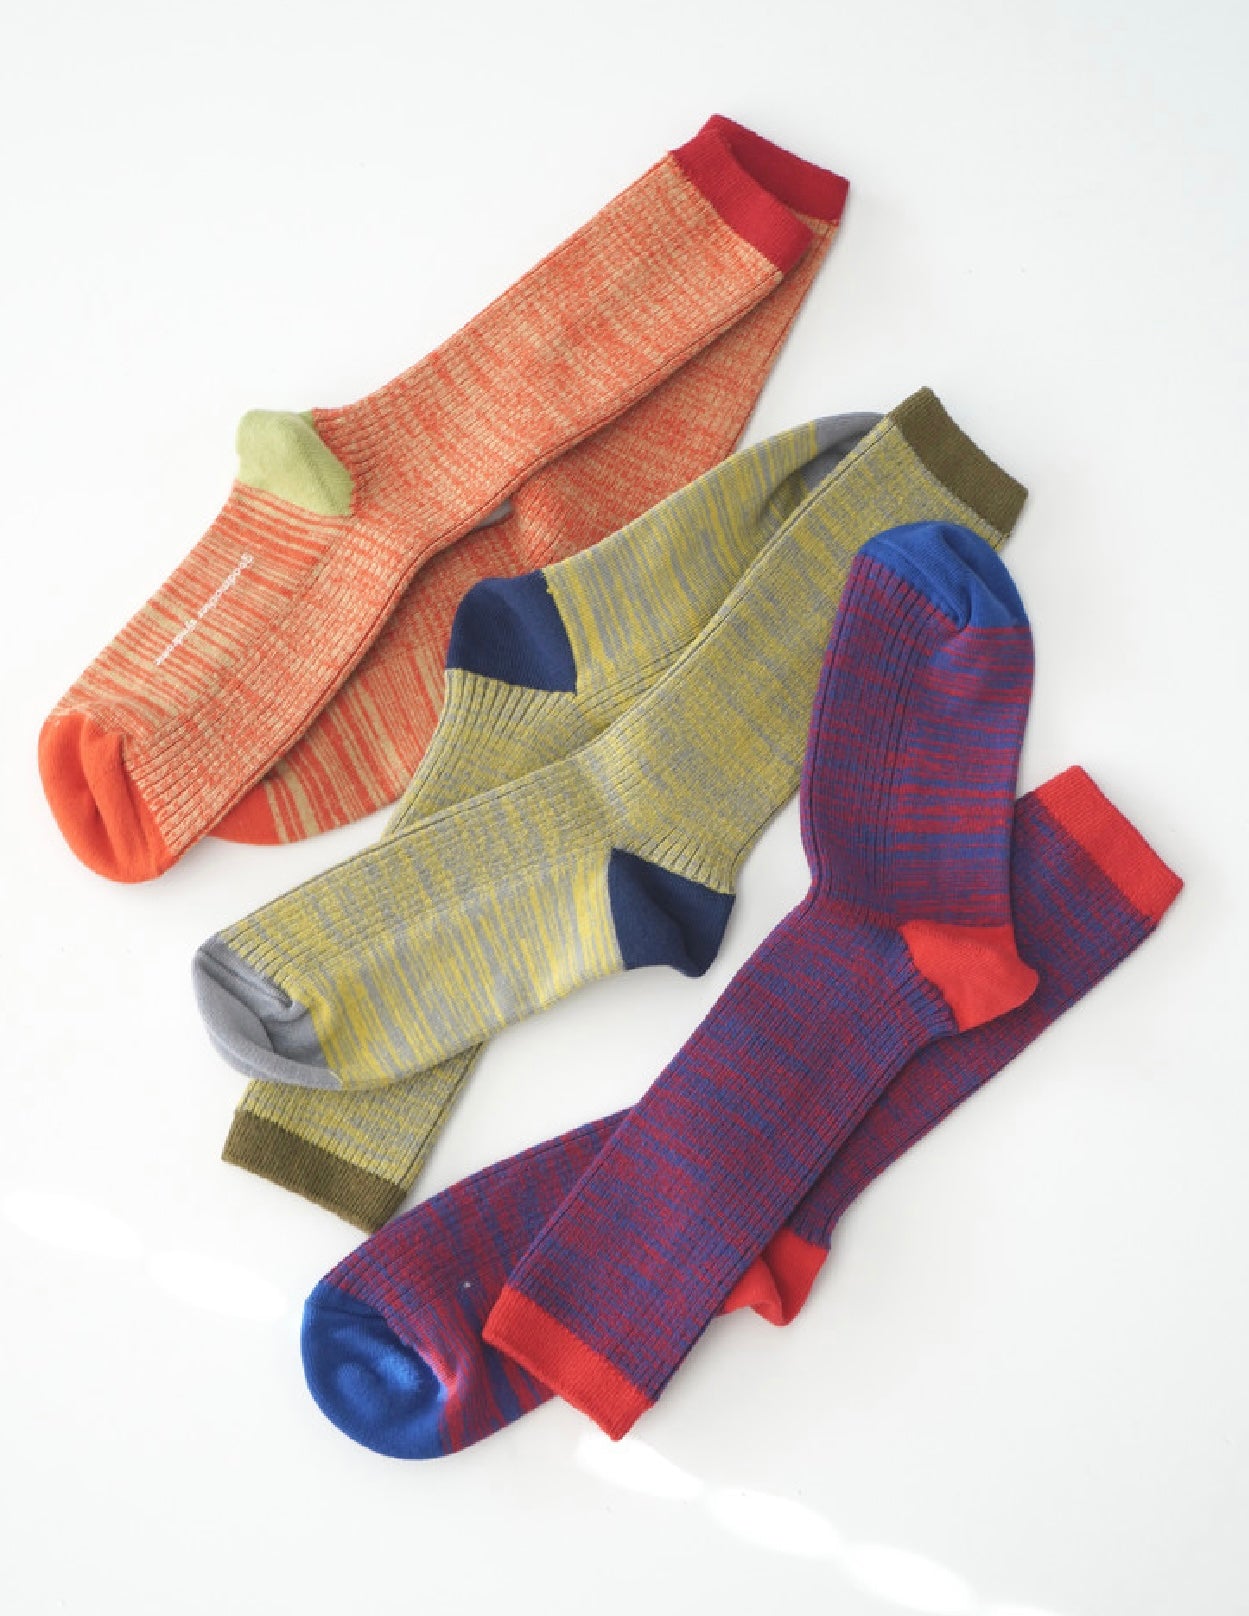 Multicoloured melange textured socks, Grey/ Yellow